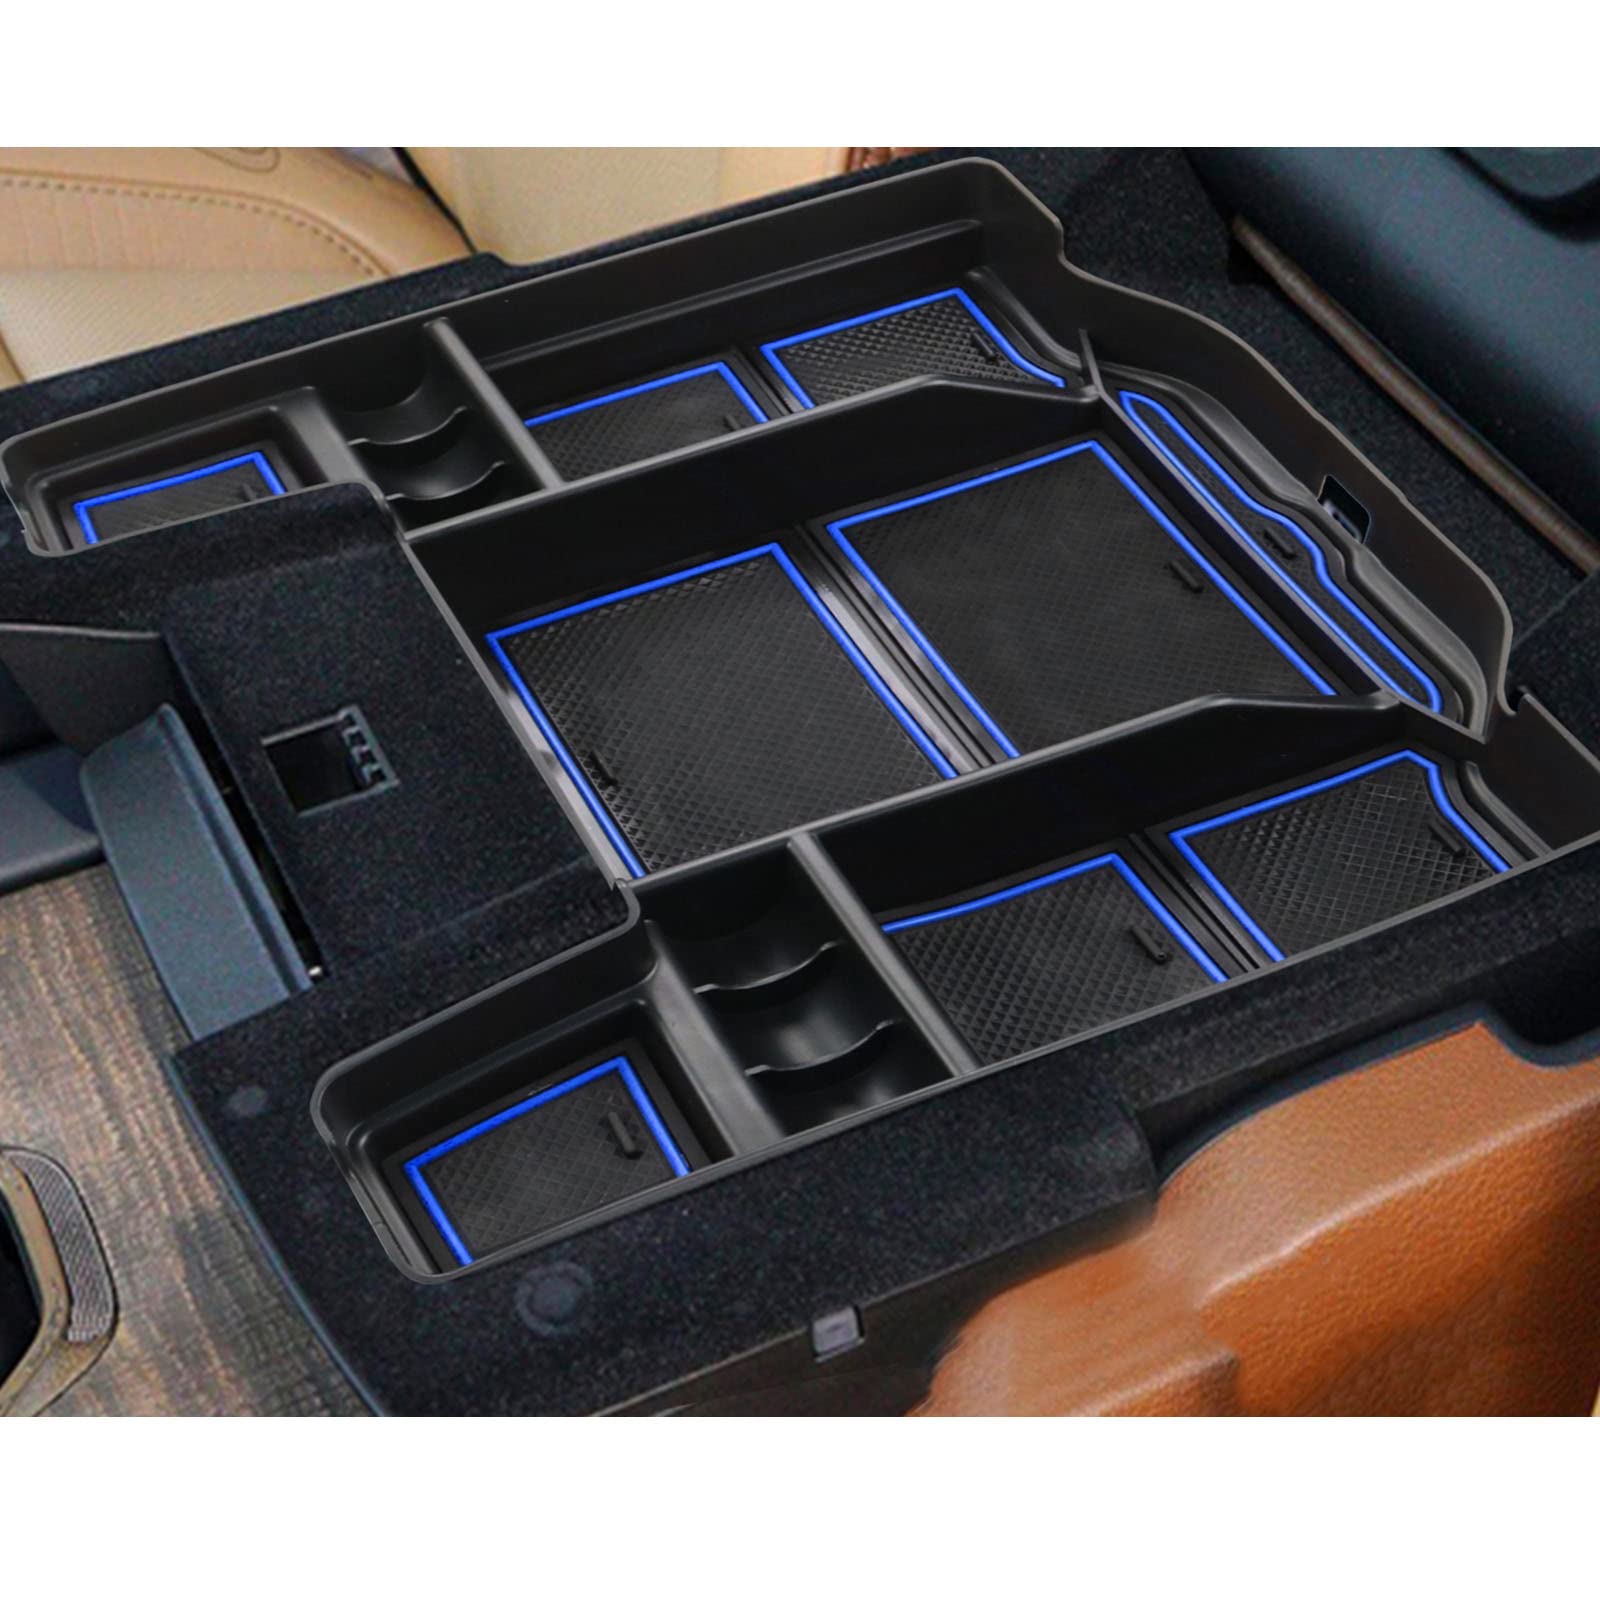 Dodge RAM 1500 Center Console Organizer Tray 2019+ - LFOTPP Car Accessories